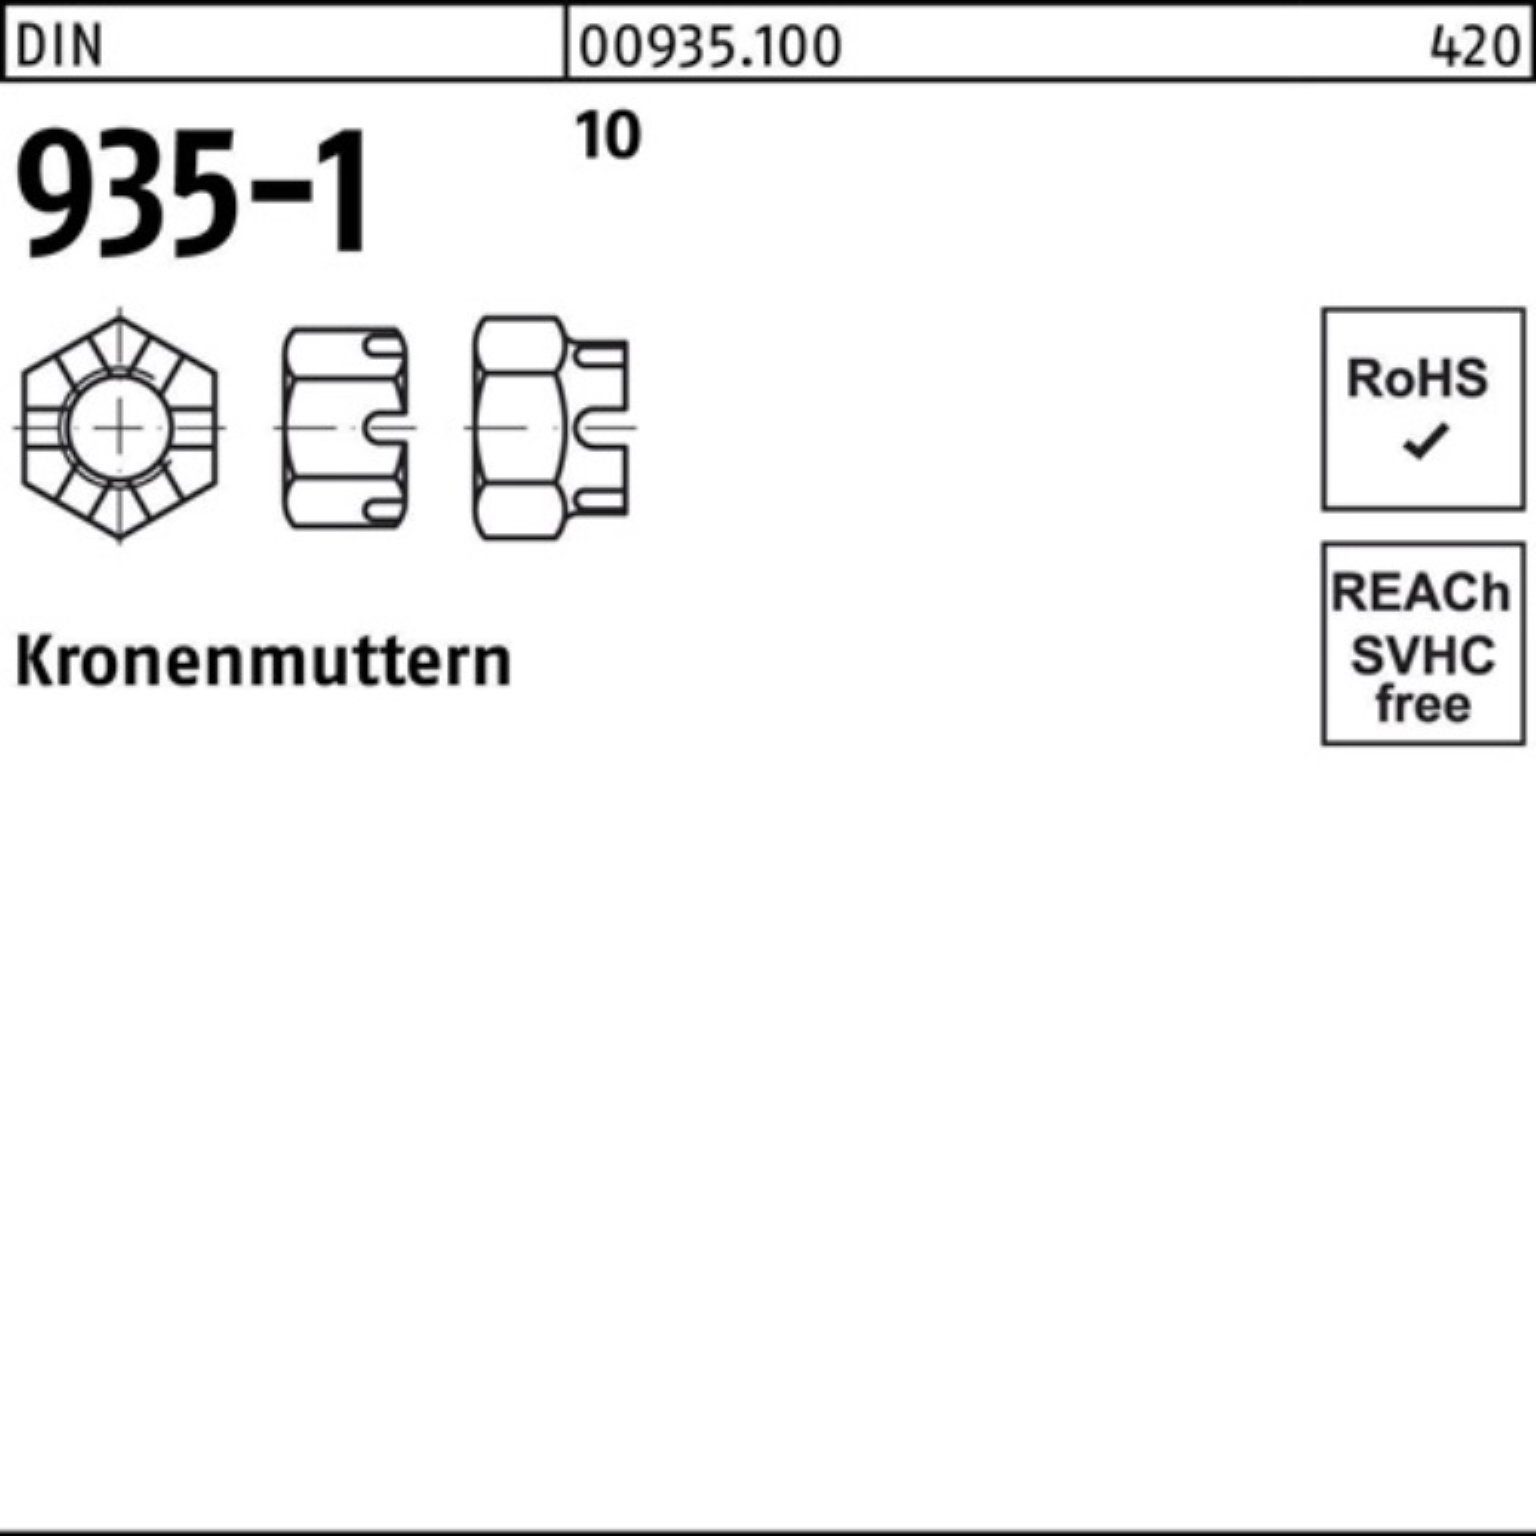 Pack Kronenmutter 10 M24 Reyher 935-1 Kronen 25 100er DIN 10 935-1 Kronenmutter Stück DIN